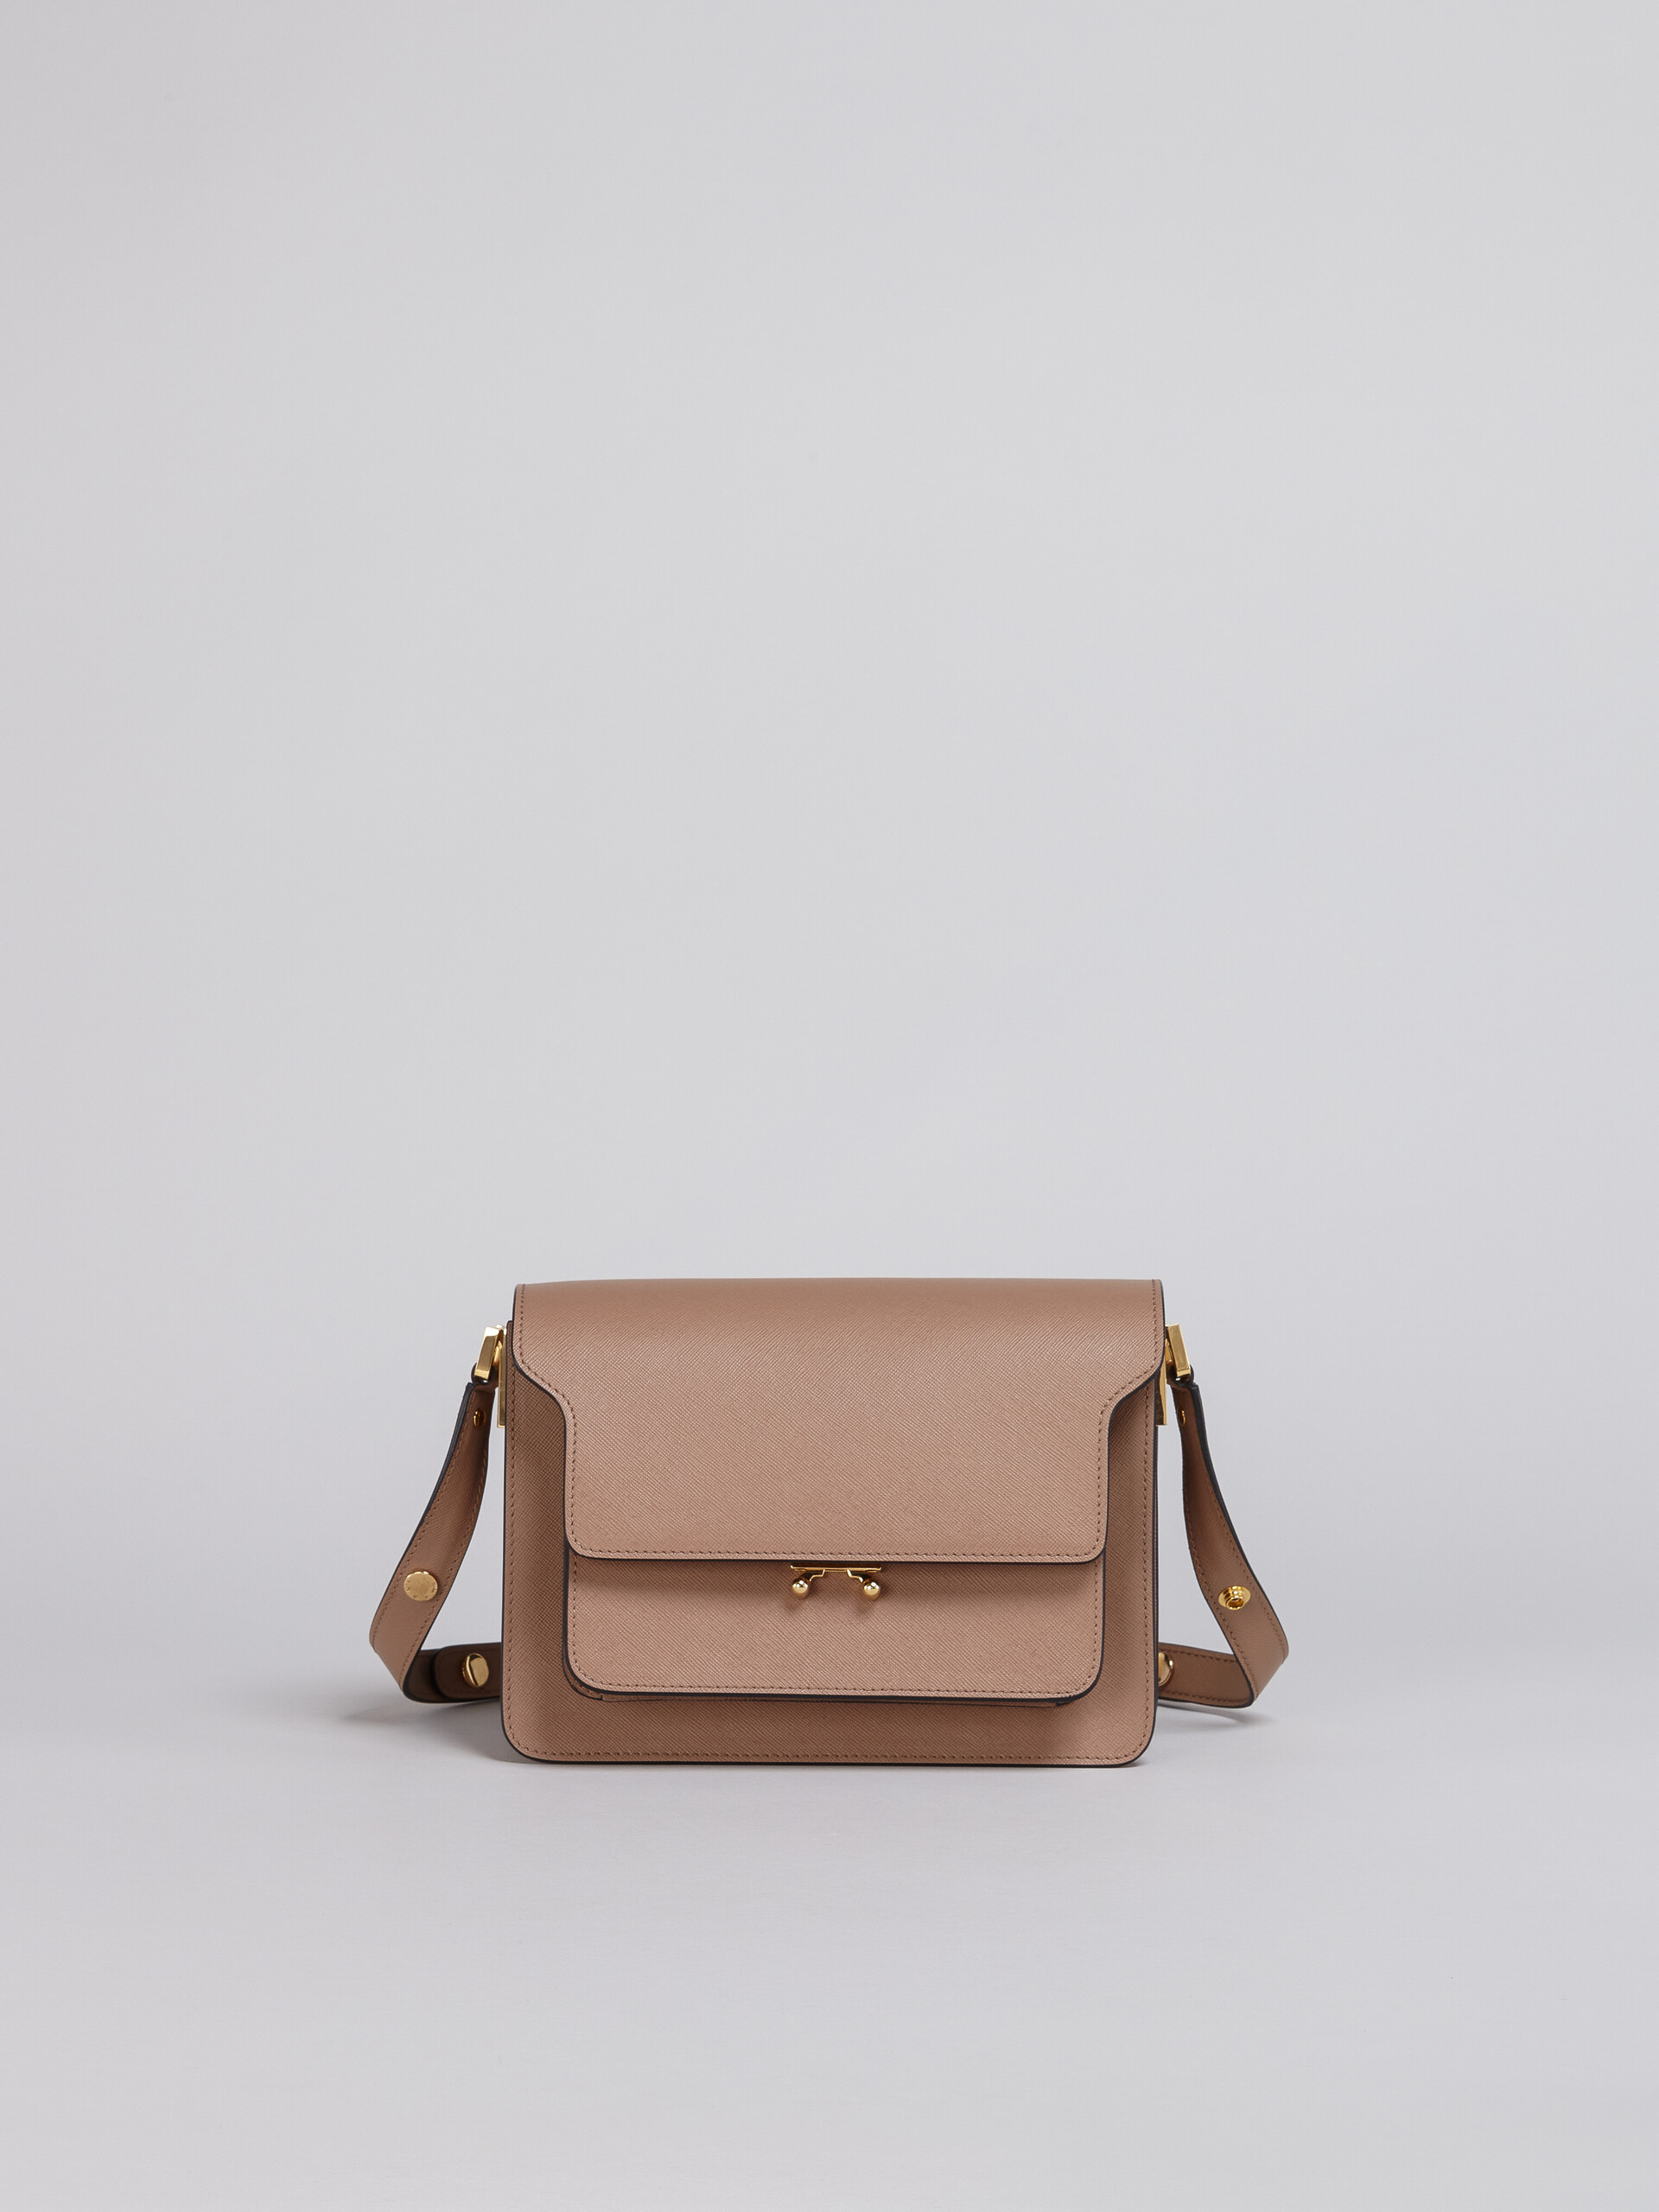 TRUNK medium bag in grey saffiano leather - Shoulder Bags - Image 1